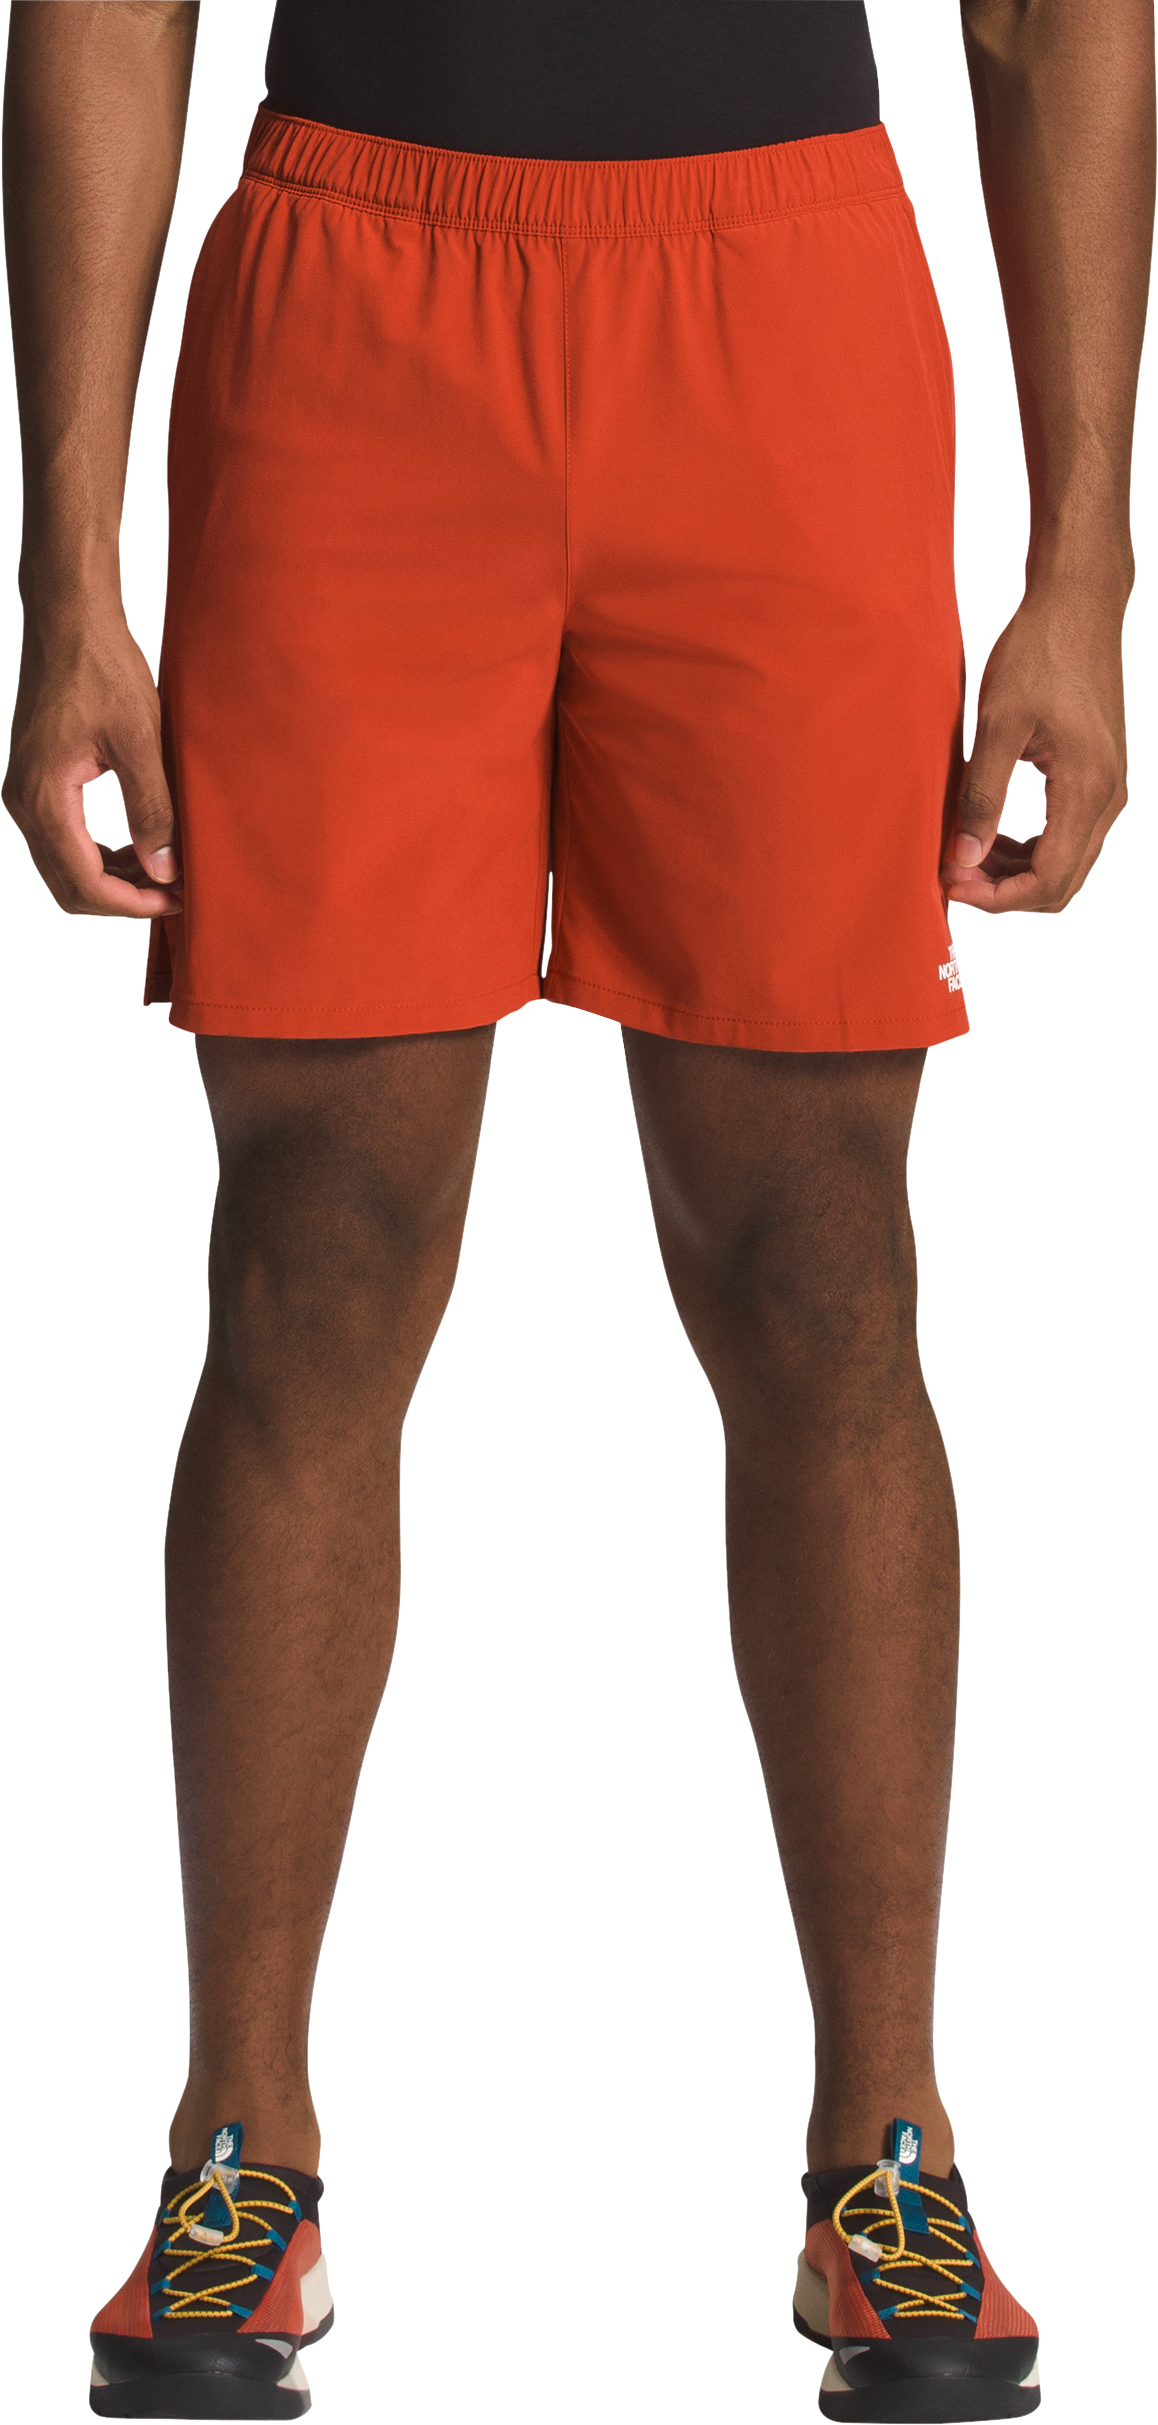  Welcome Las Vegas Custom Mens Underwear Quick Dry Boxer Briefs  Elastic Waistband Trunks Pants : Sports & Outdoors